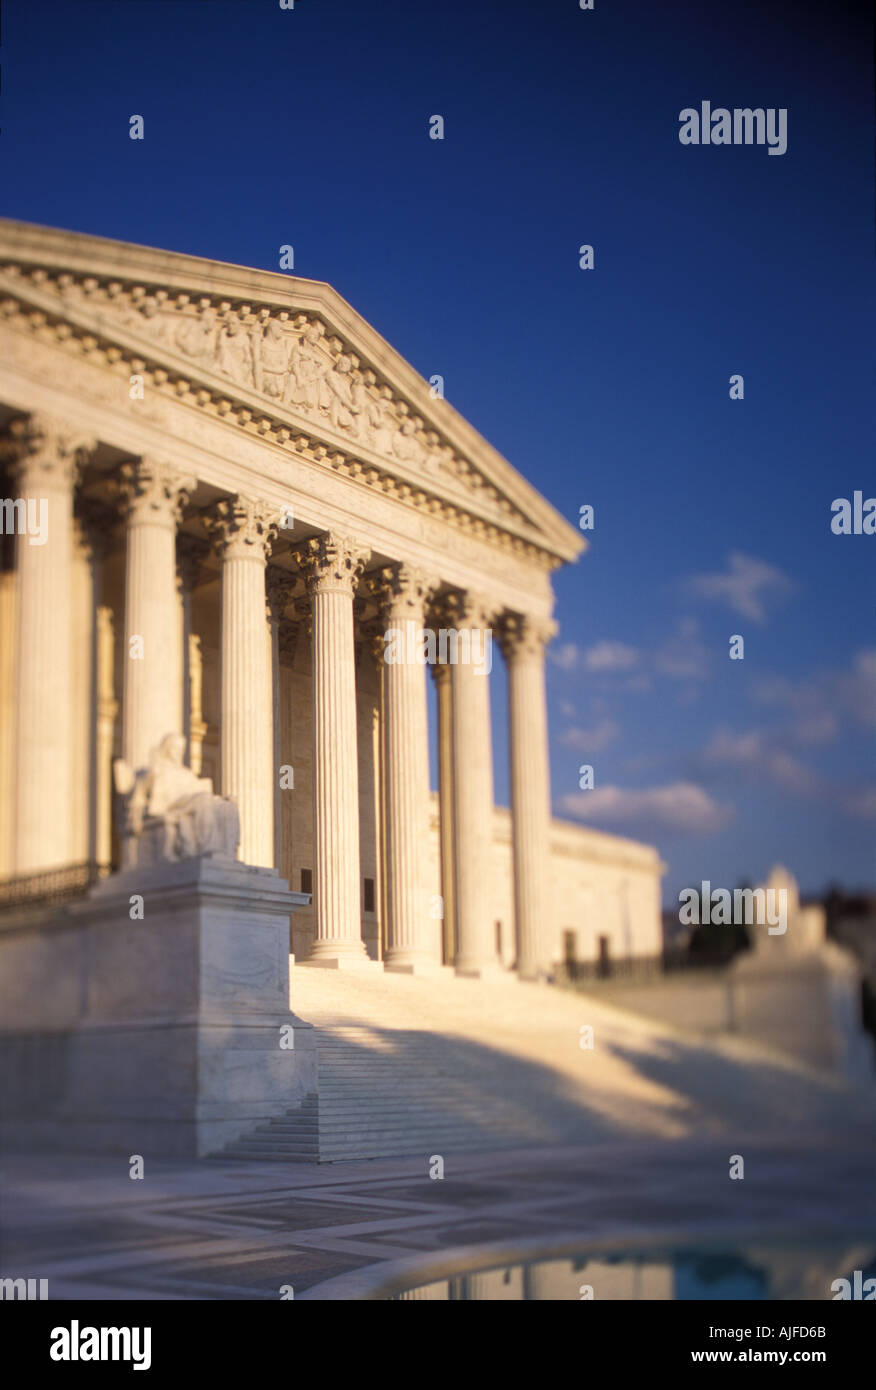 Supreme Court building in Washington D.C. Stock Photo